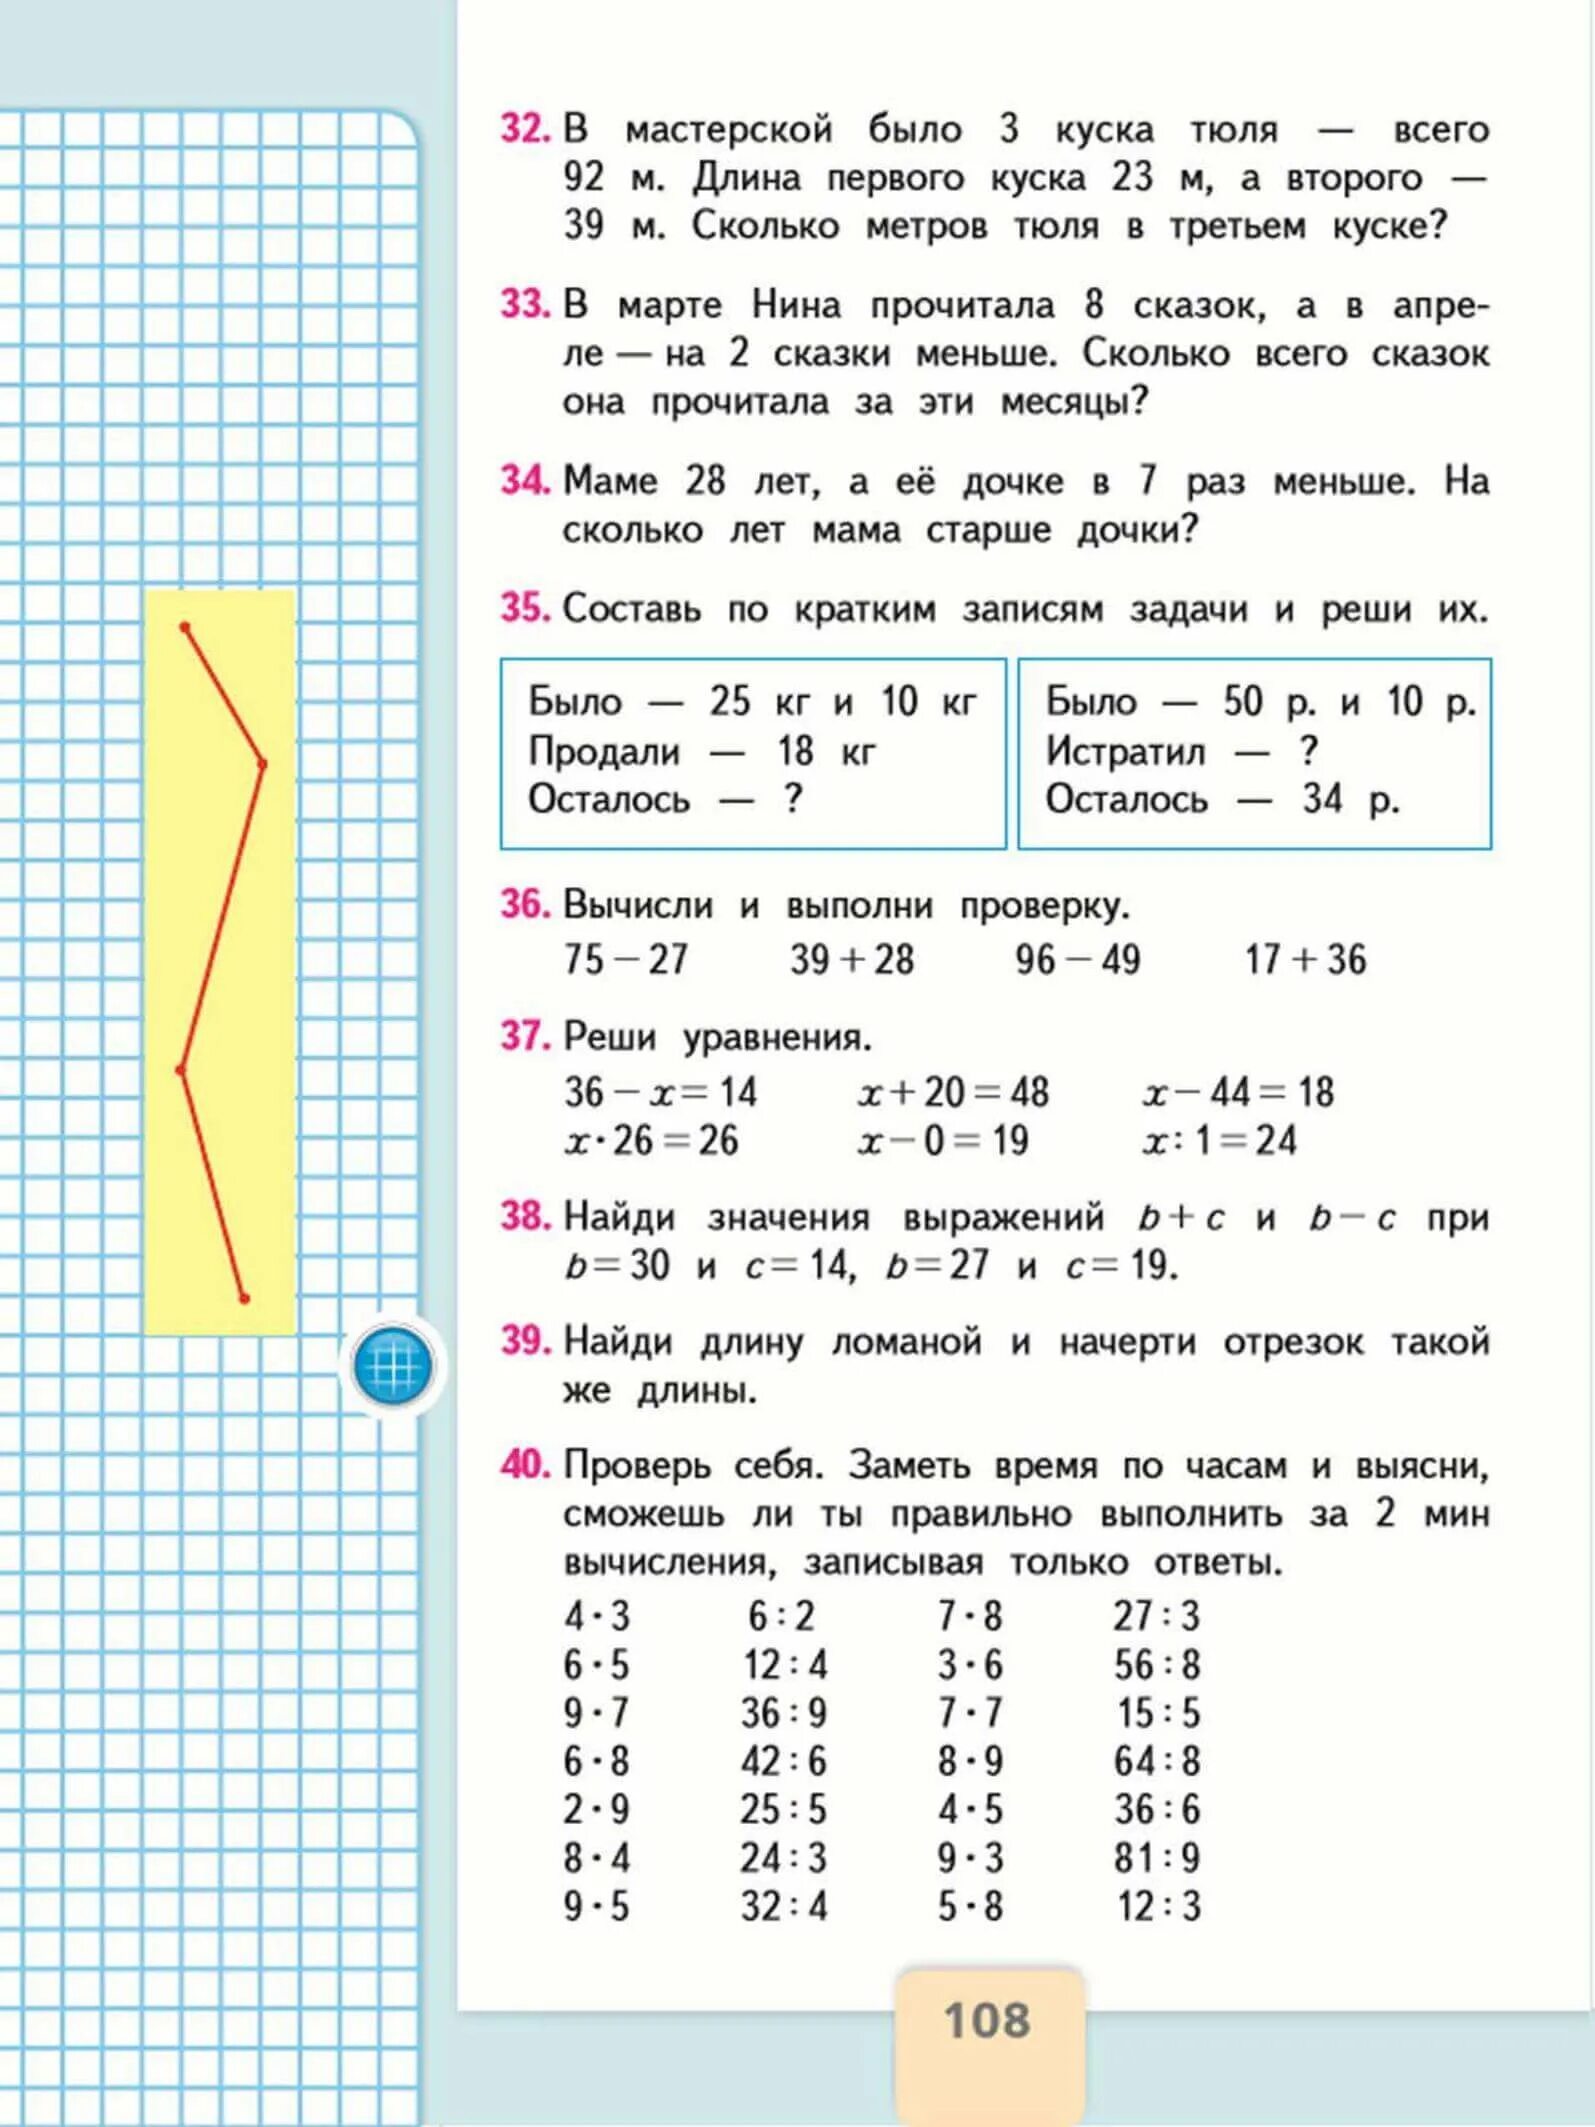 Математика учебник страница 29 номер 108. Математика 3 класс 1 часть учебник стр 108 номер 37.